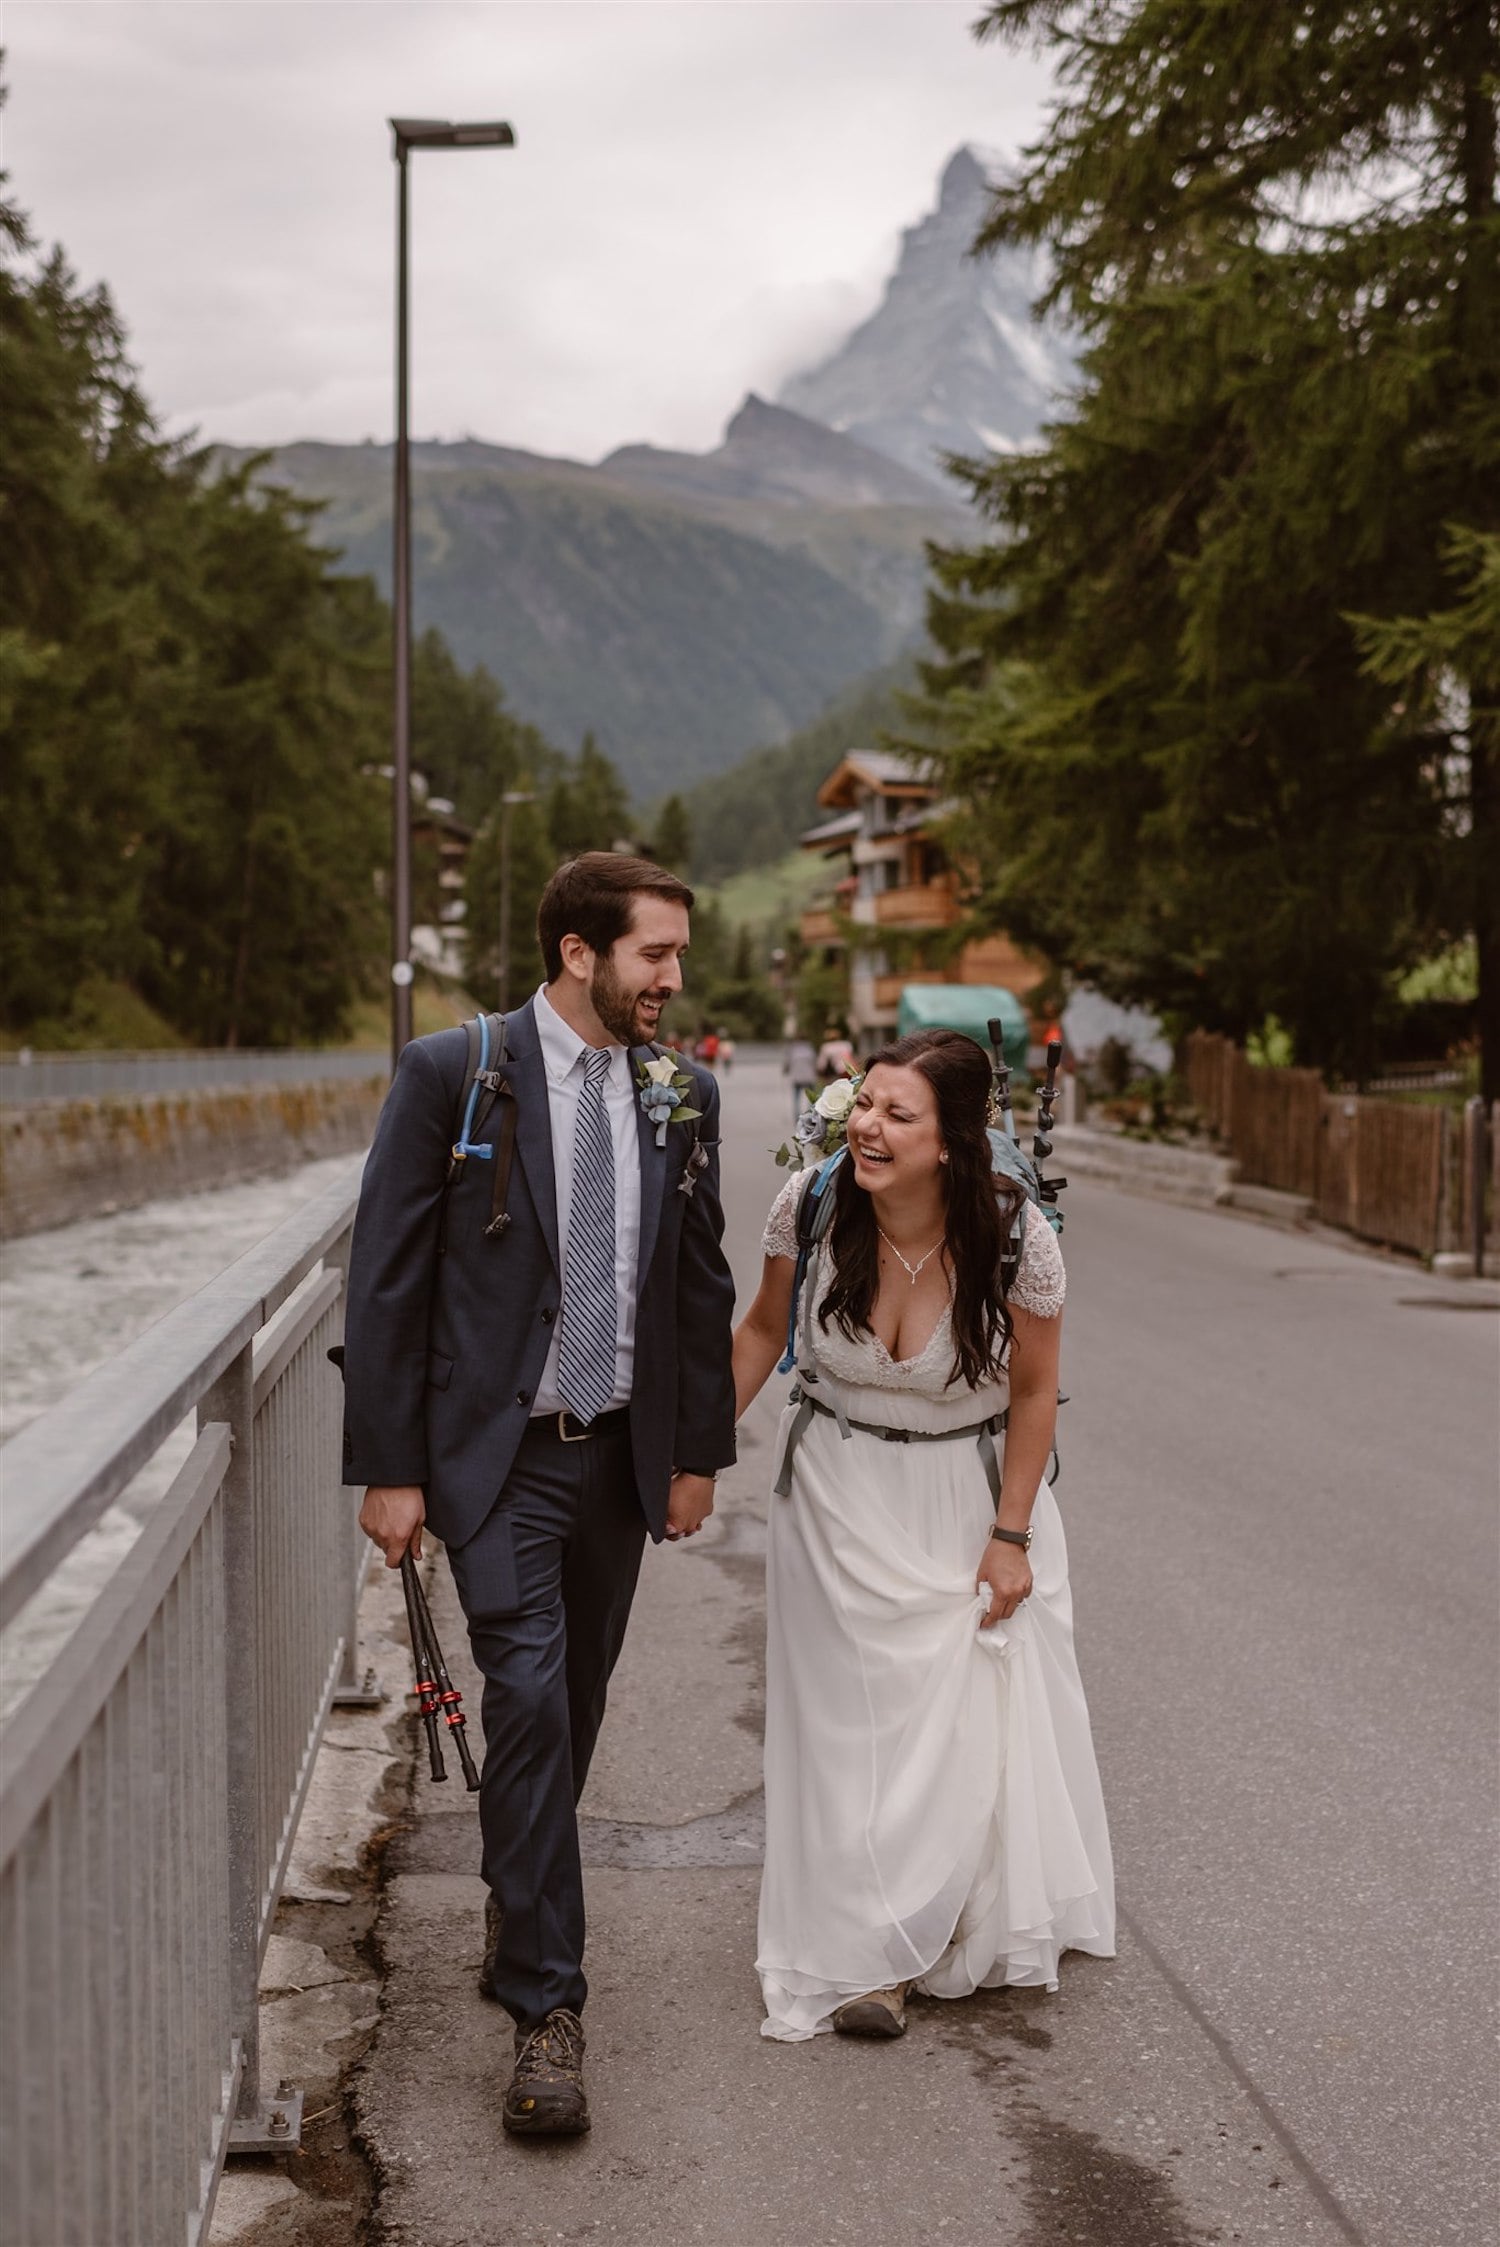 Lovers getting married in Zermatt, Switzerland